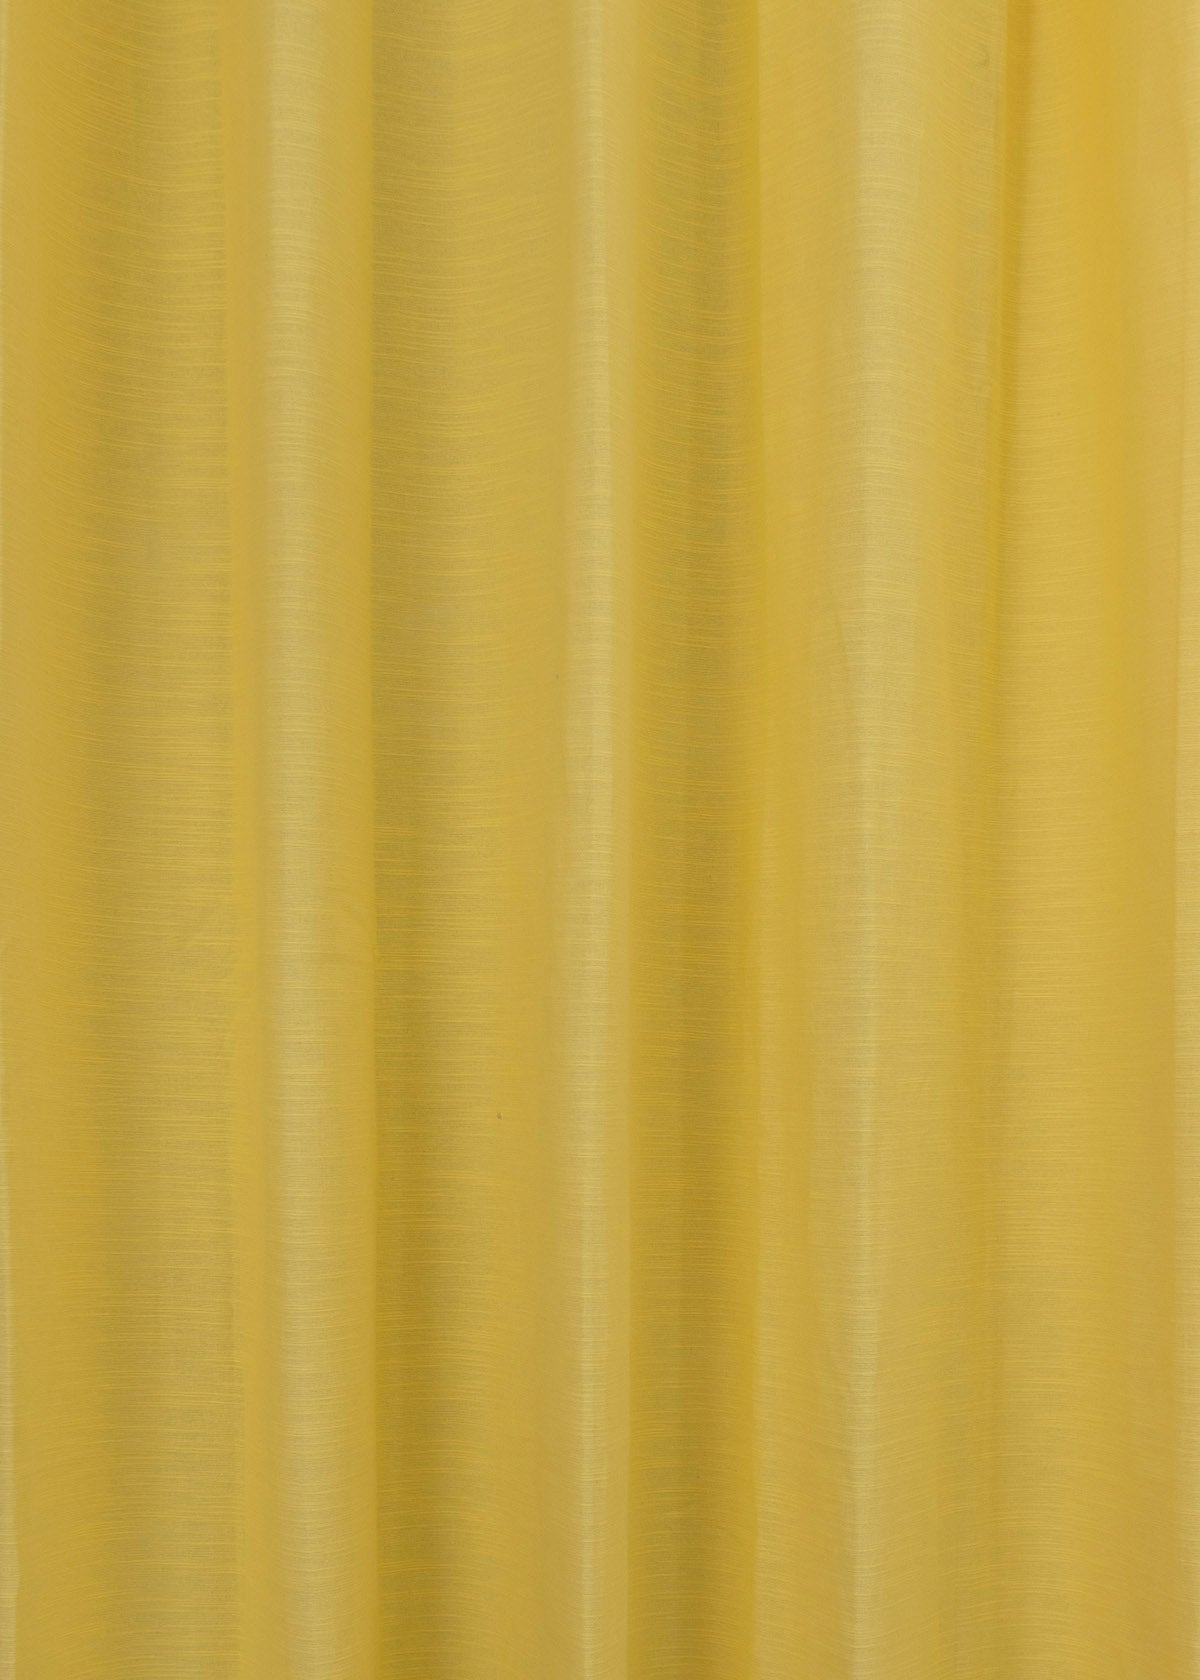 Solid Primrose yellow 100% Customizable Cotton plain curtain for bedroom - Room darkening